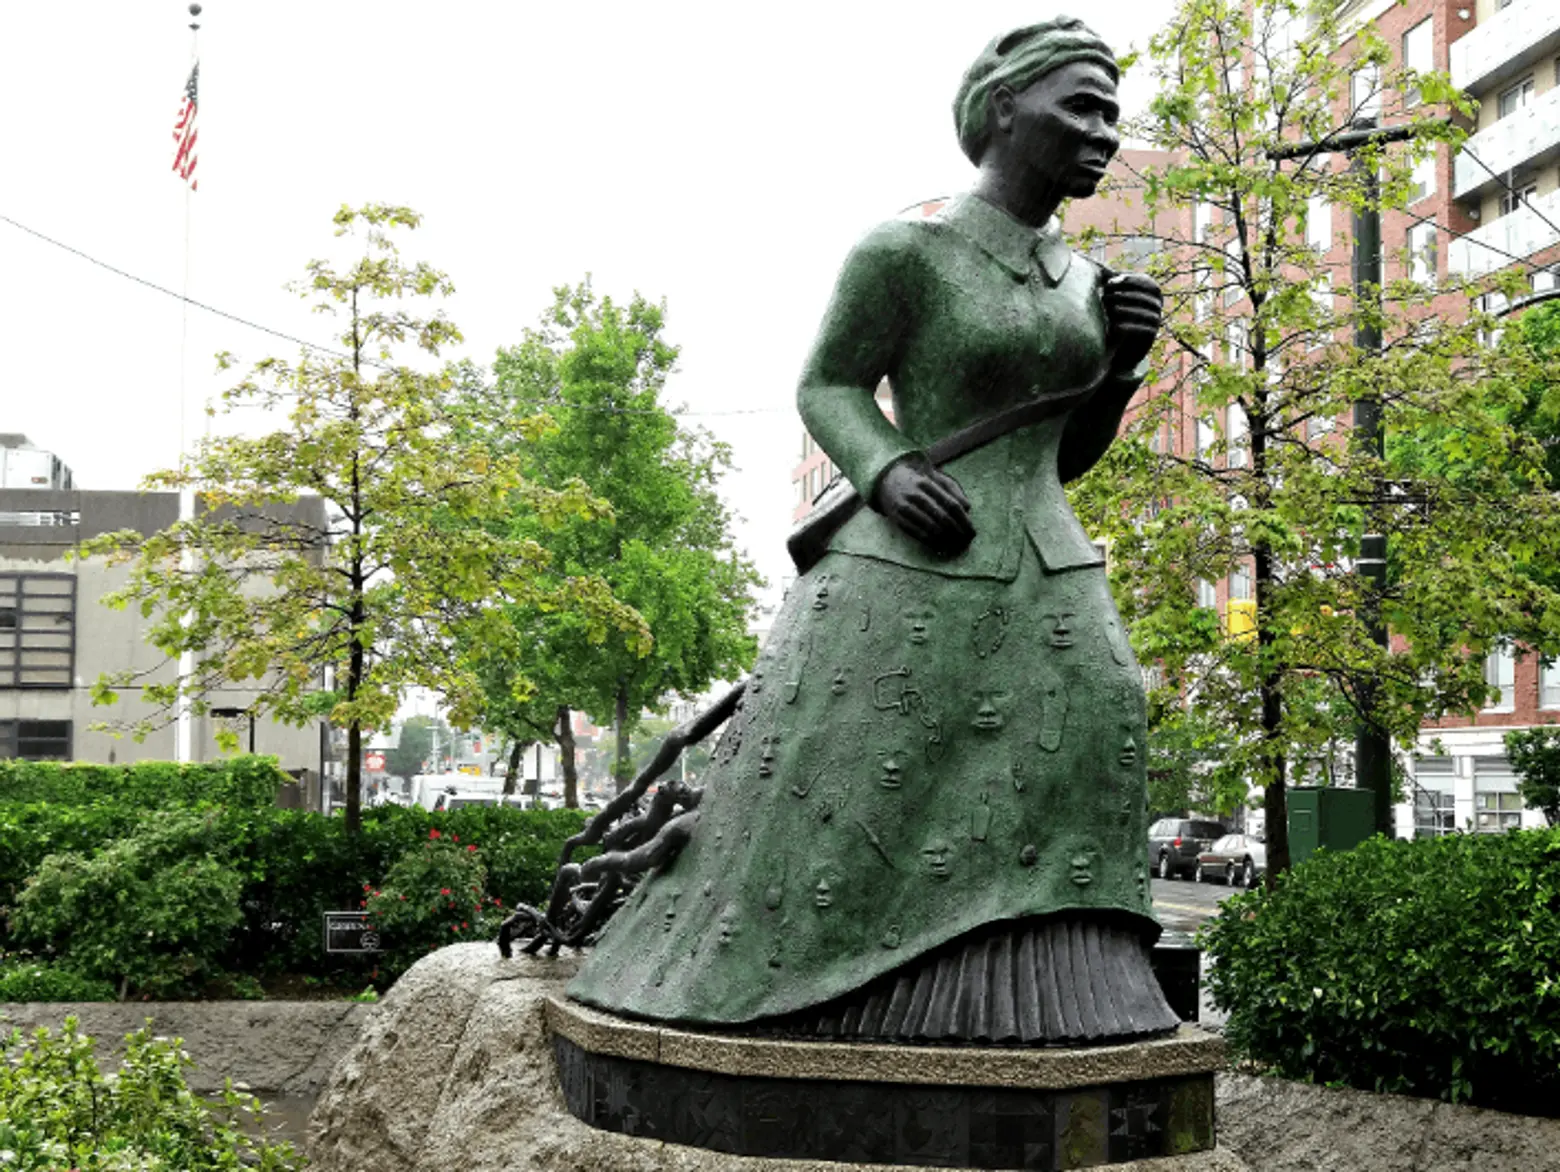 The story behind Harlem’s trailblazing Harriet Tubman sculpture